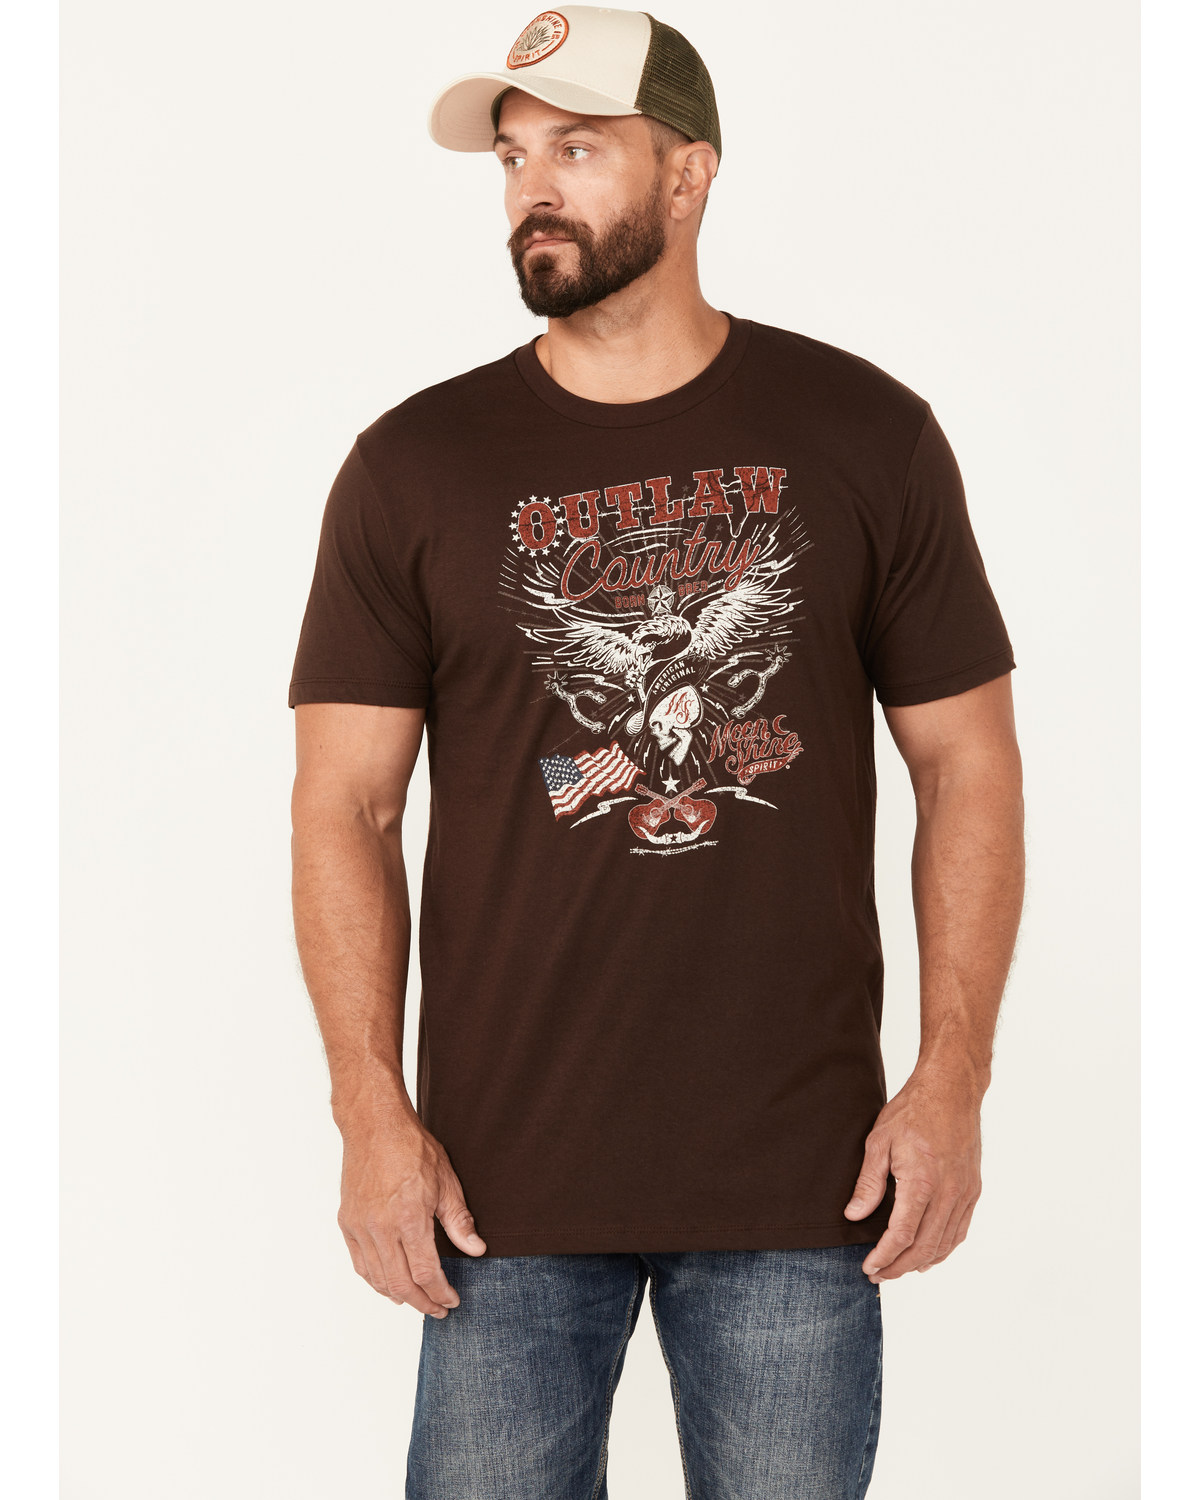 Moonshine Spirit Men's Outlaw Racing Short Sleeve Graphic T-Shirt